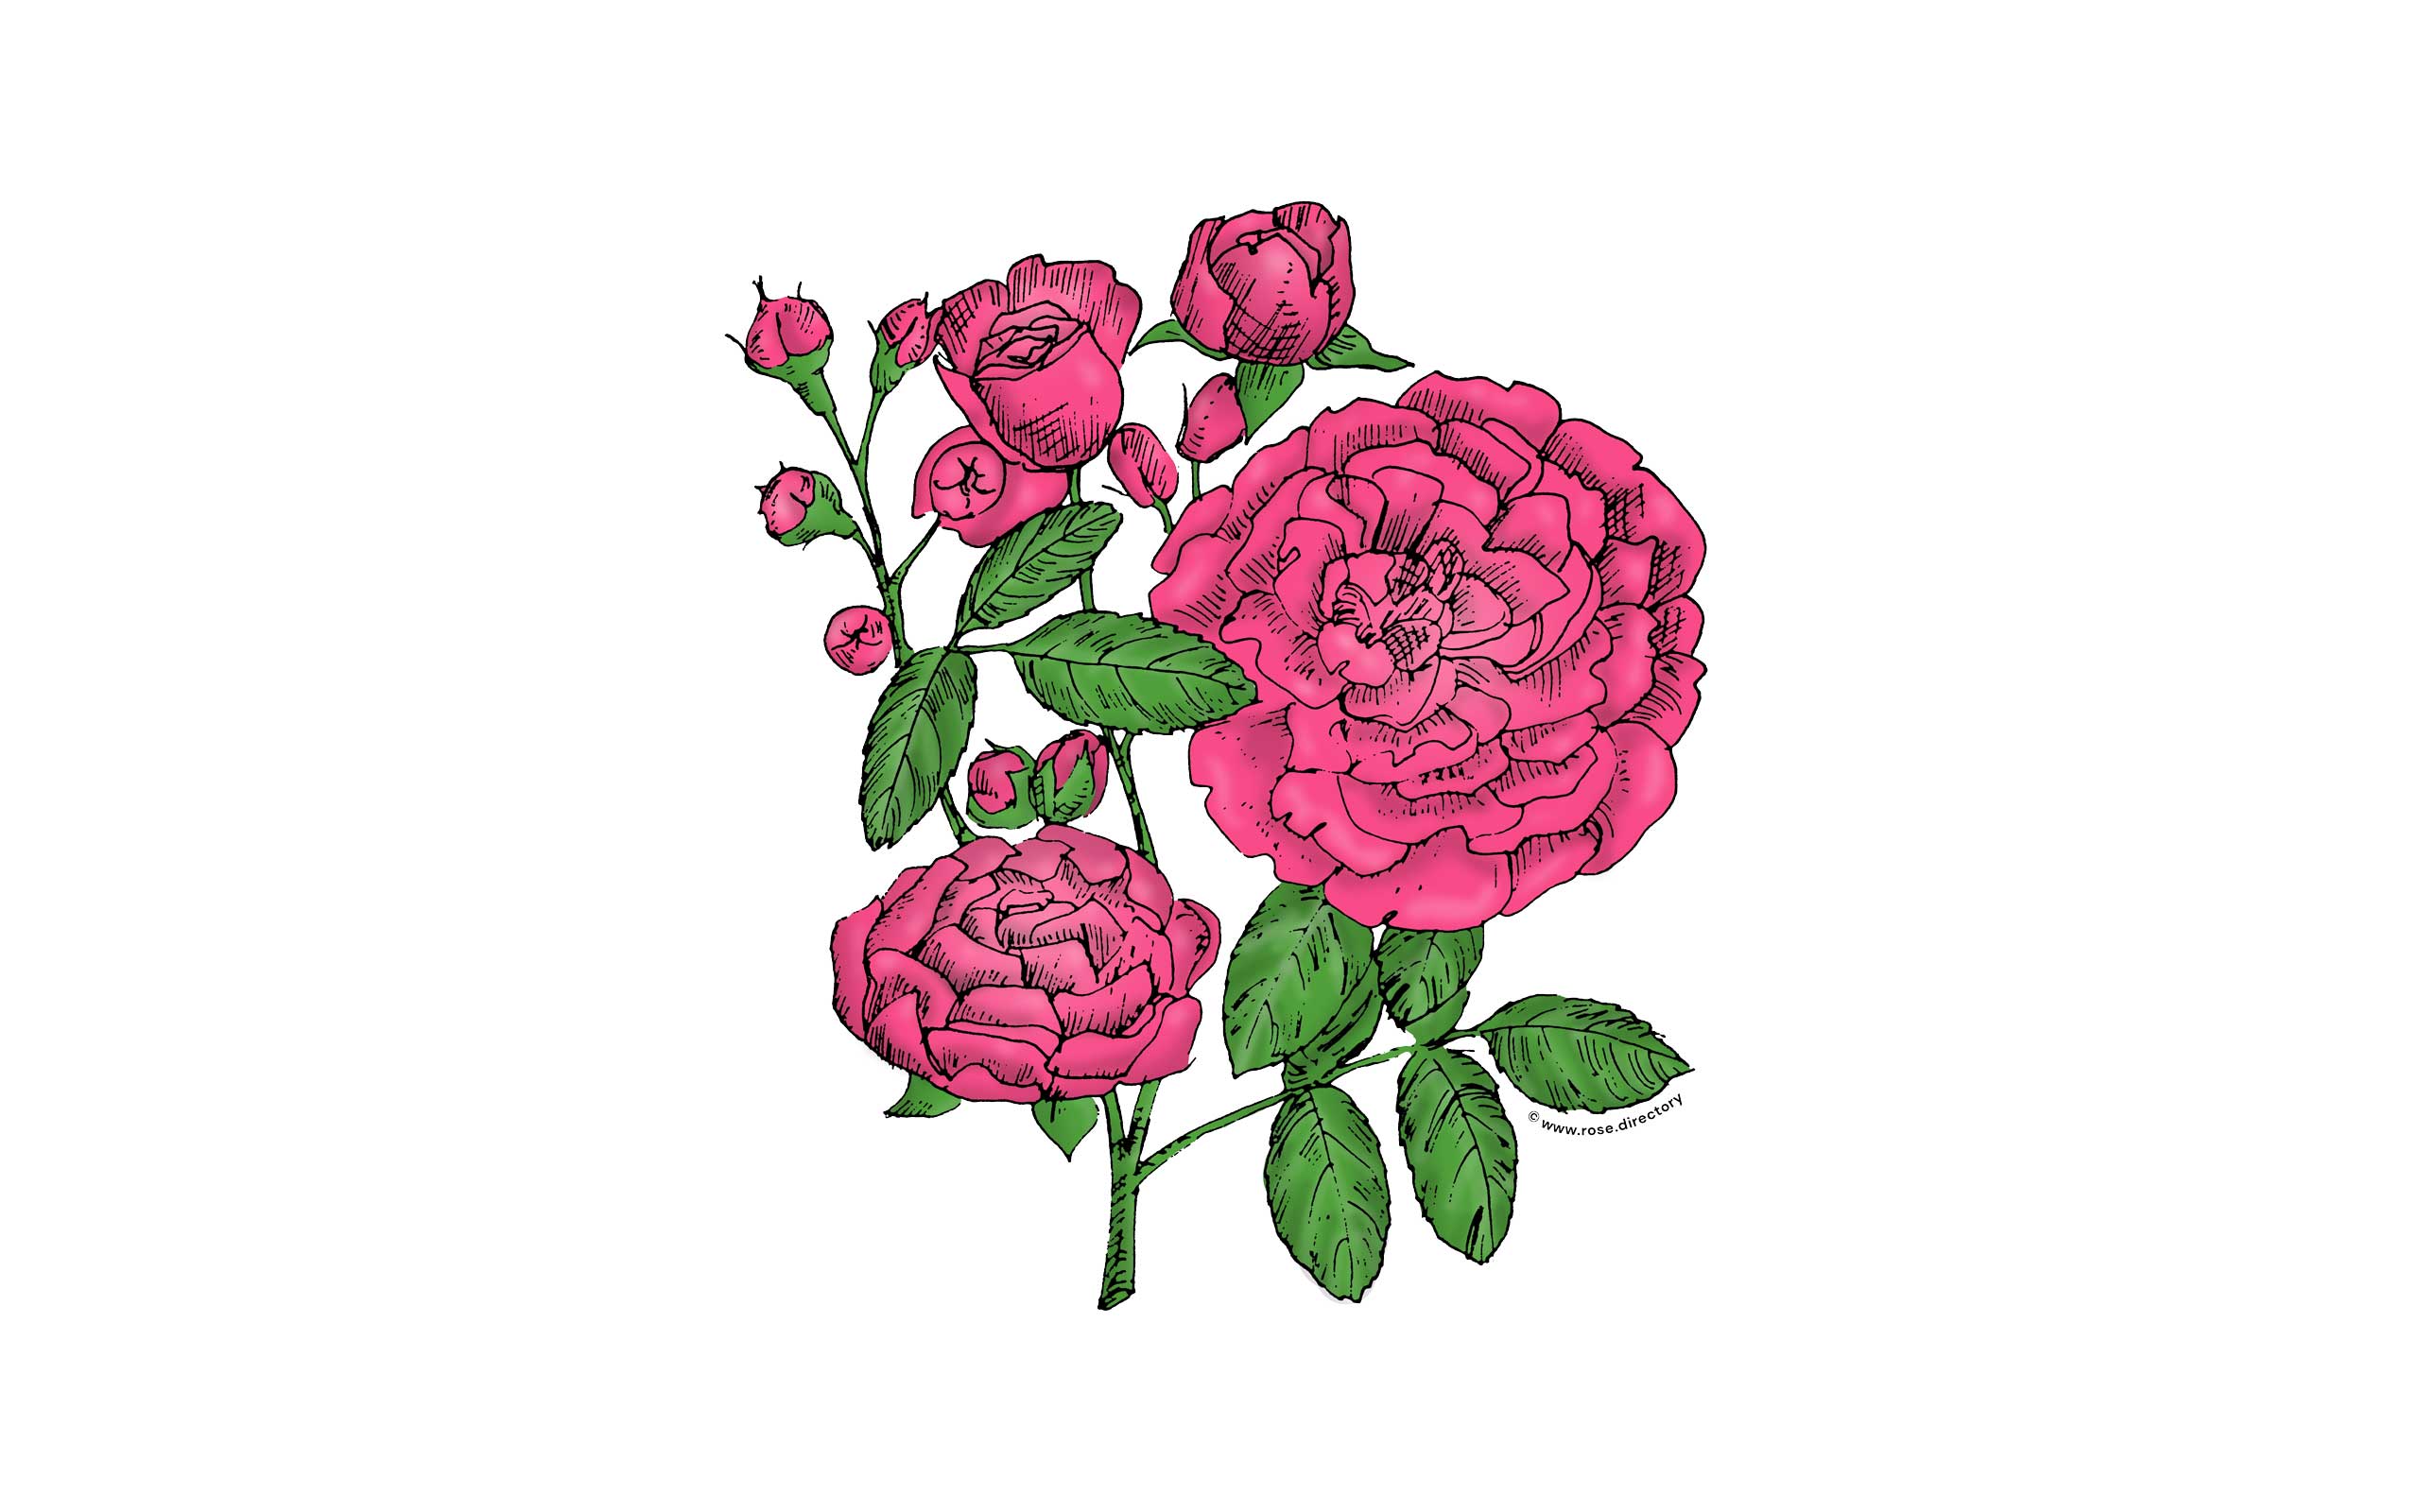 Mid Pink Rosette Rose Bloom Full 26-40 Petals In 3+ Rows